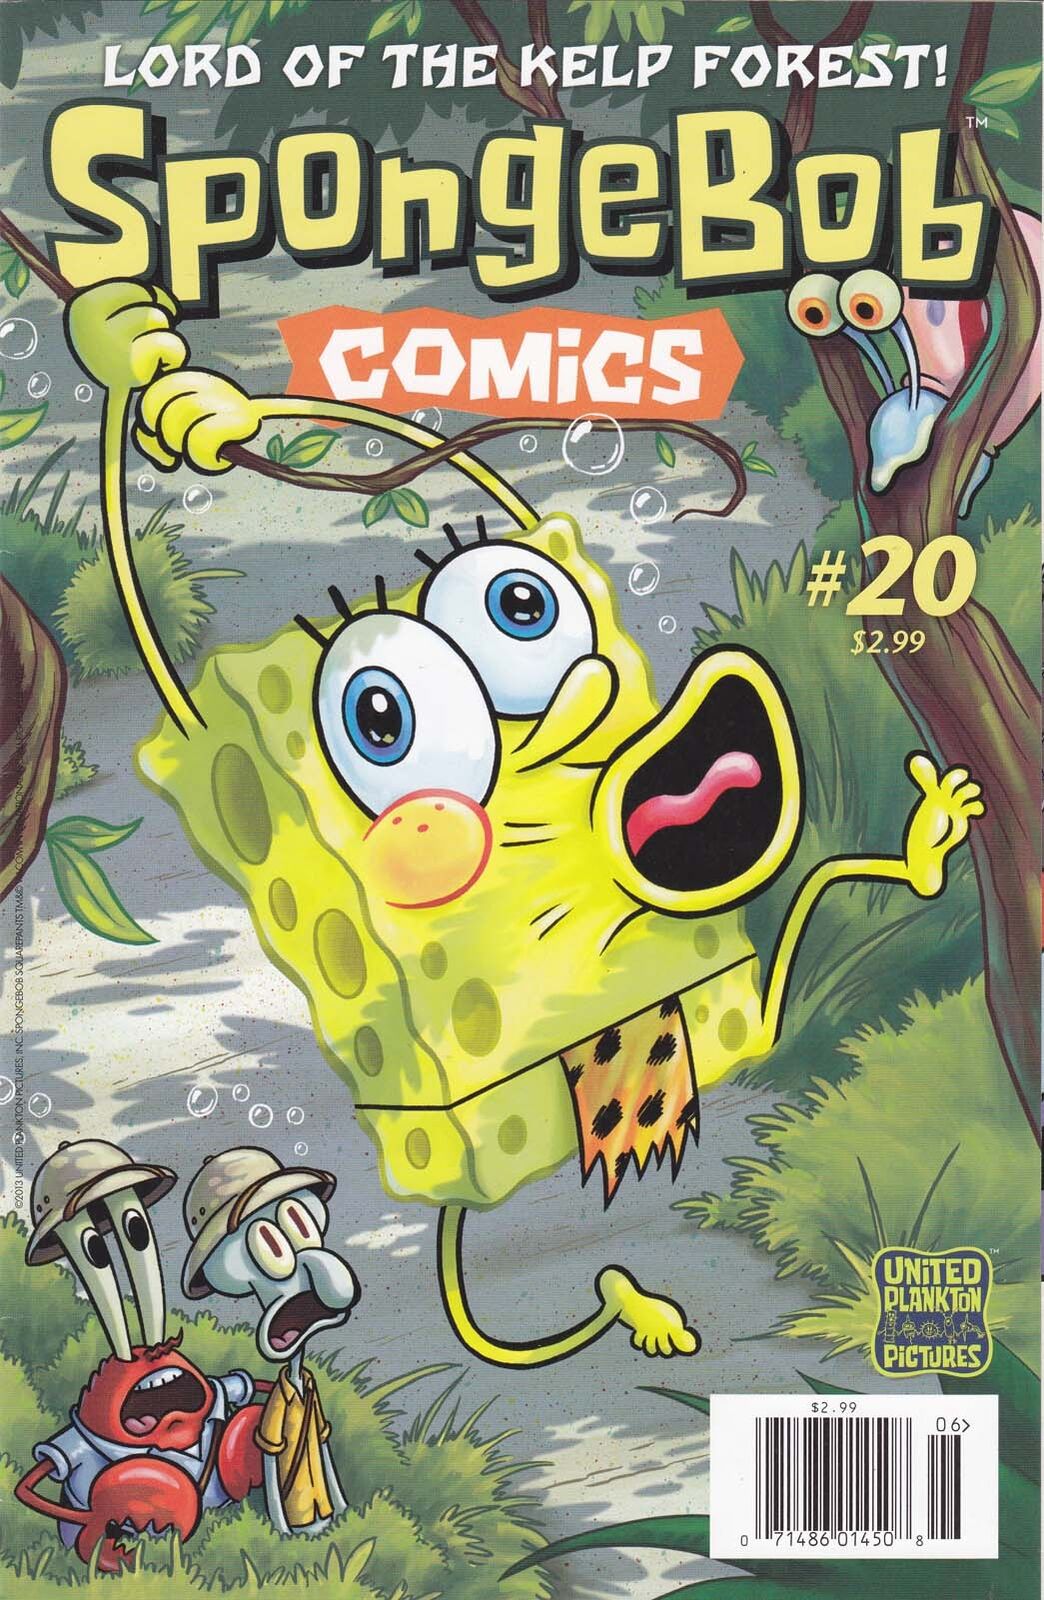 Spongebob Comics #20 (Newsstand) VF/NM; United Plankton Pictures | we combine sh